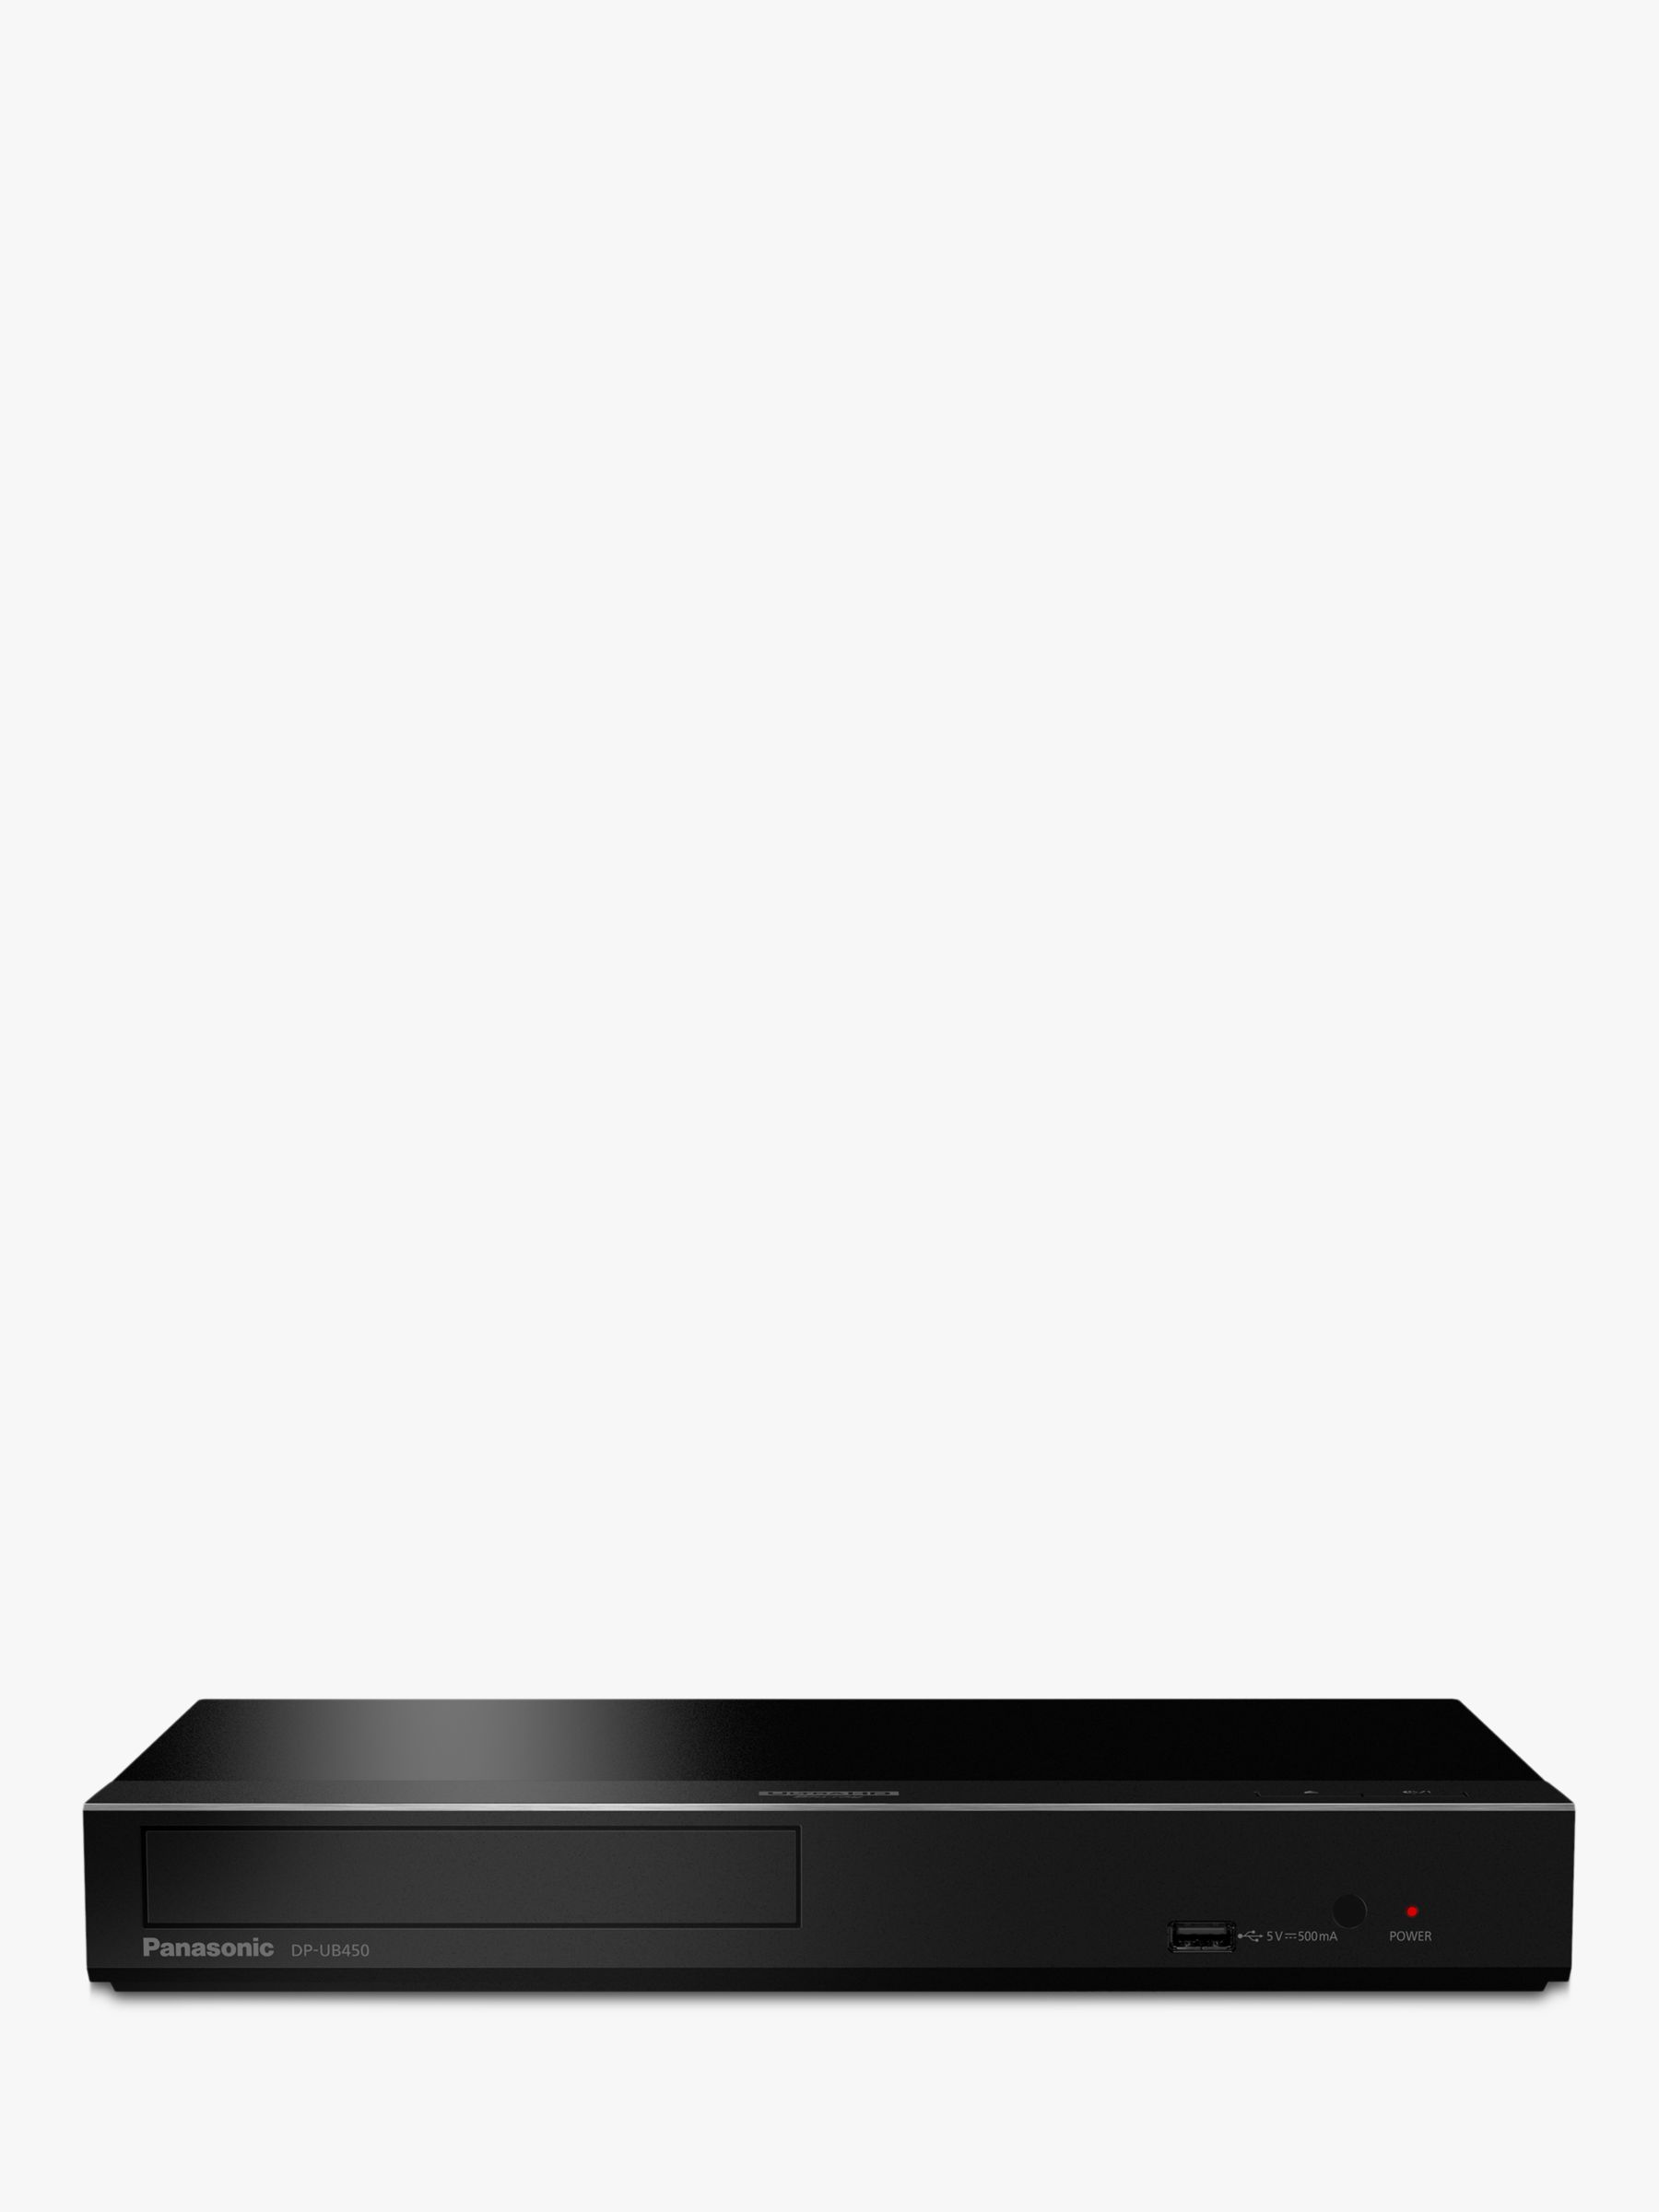 Panasonic DP-UB450EB 3D 4K UHD HDR Blu-Ray/DVD Player with High Resolution Audio review